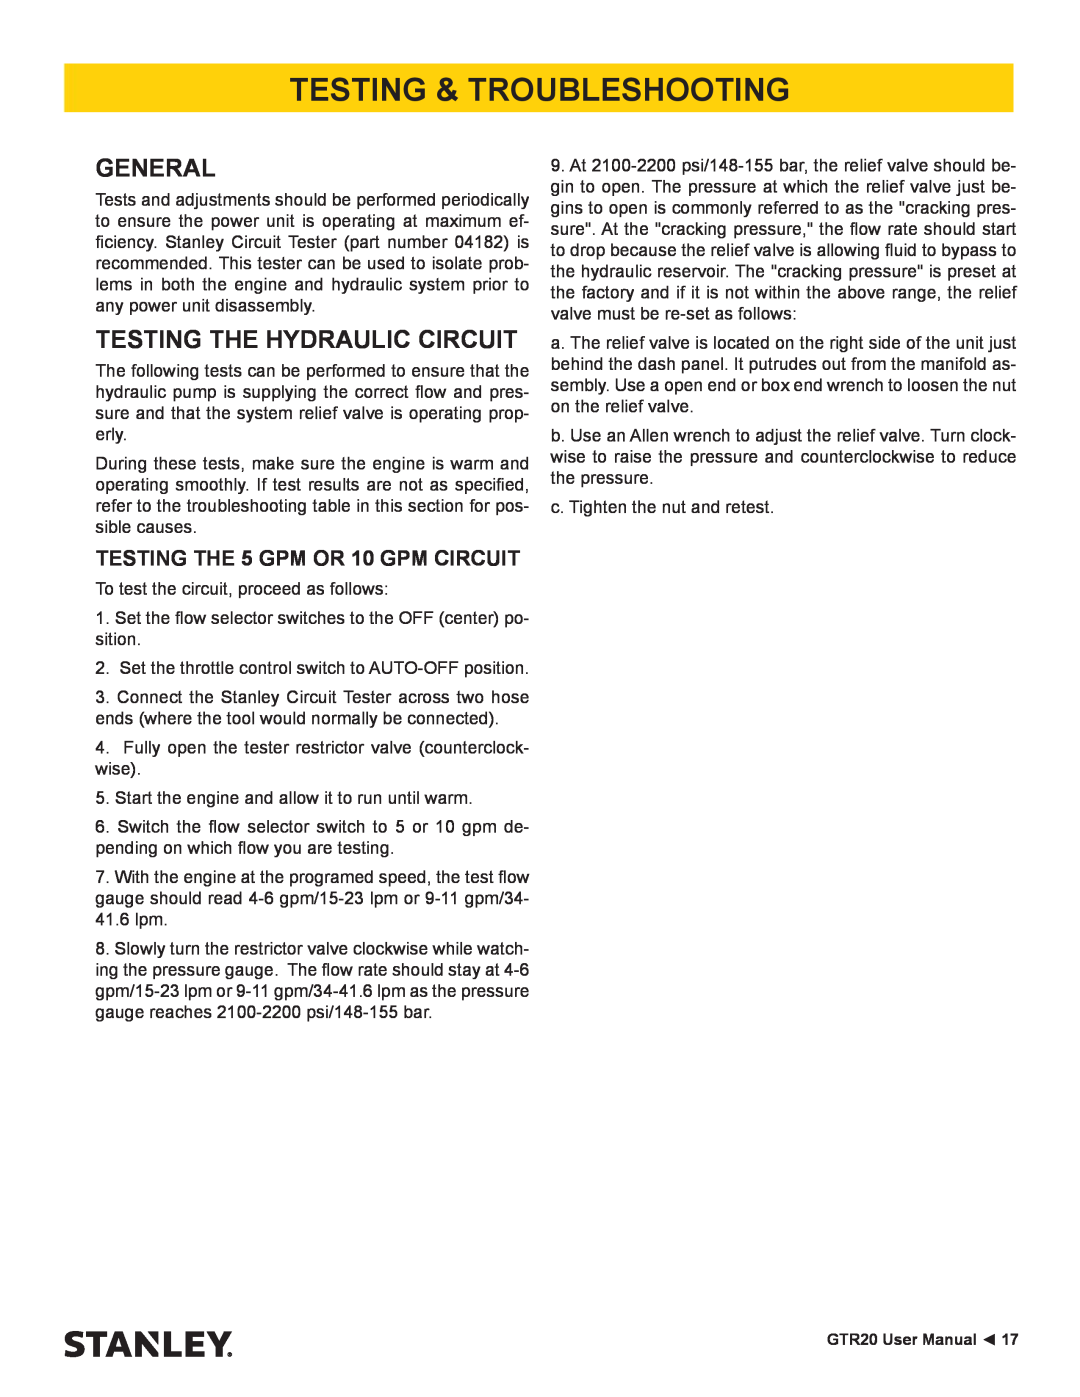 Stanley Black & Decker GTR20 user manual Testing & Troubleshooting, General, Testing The Hydraulic Circuit 